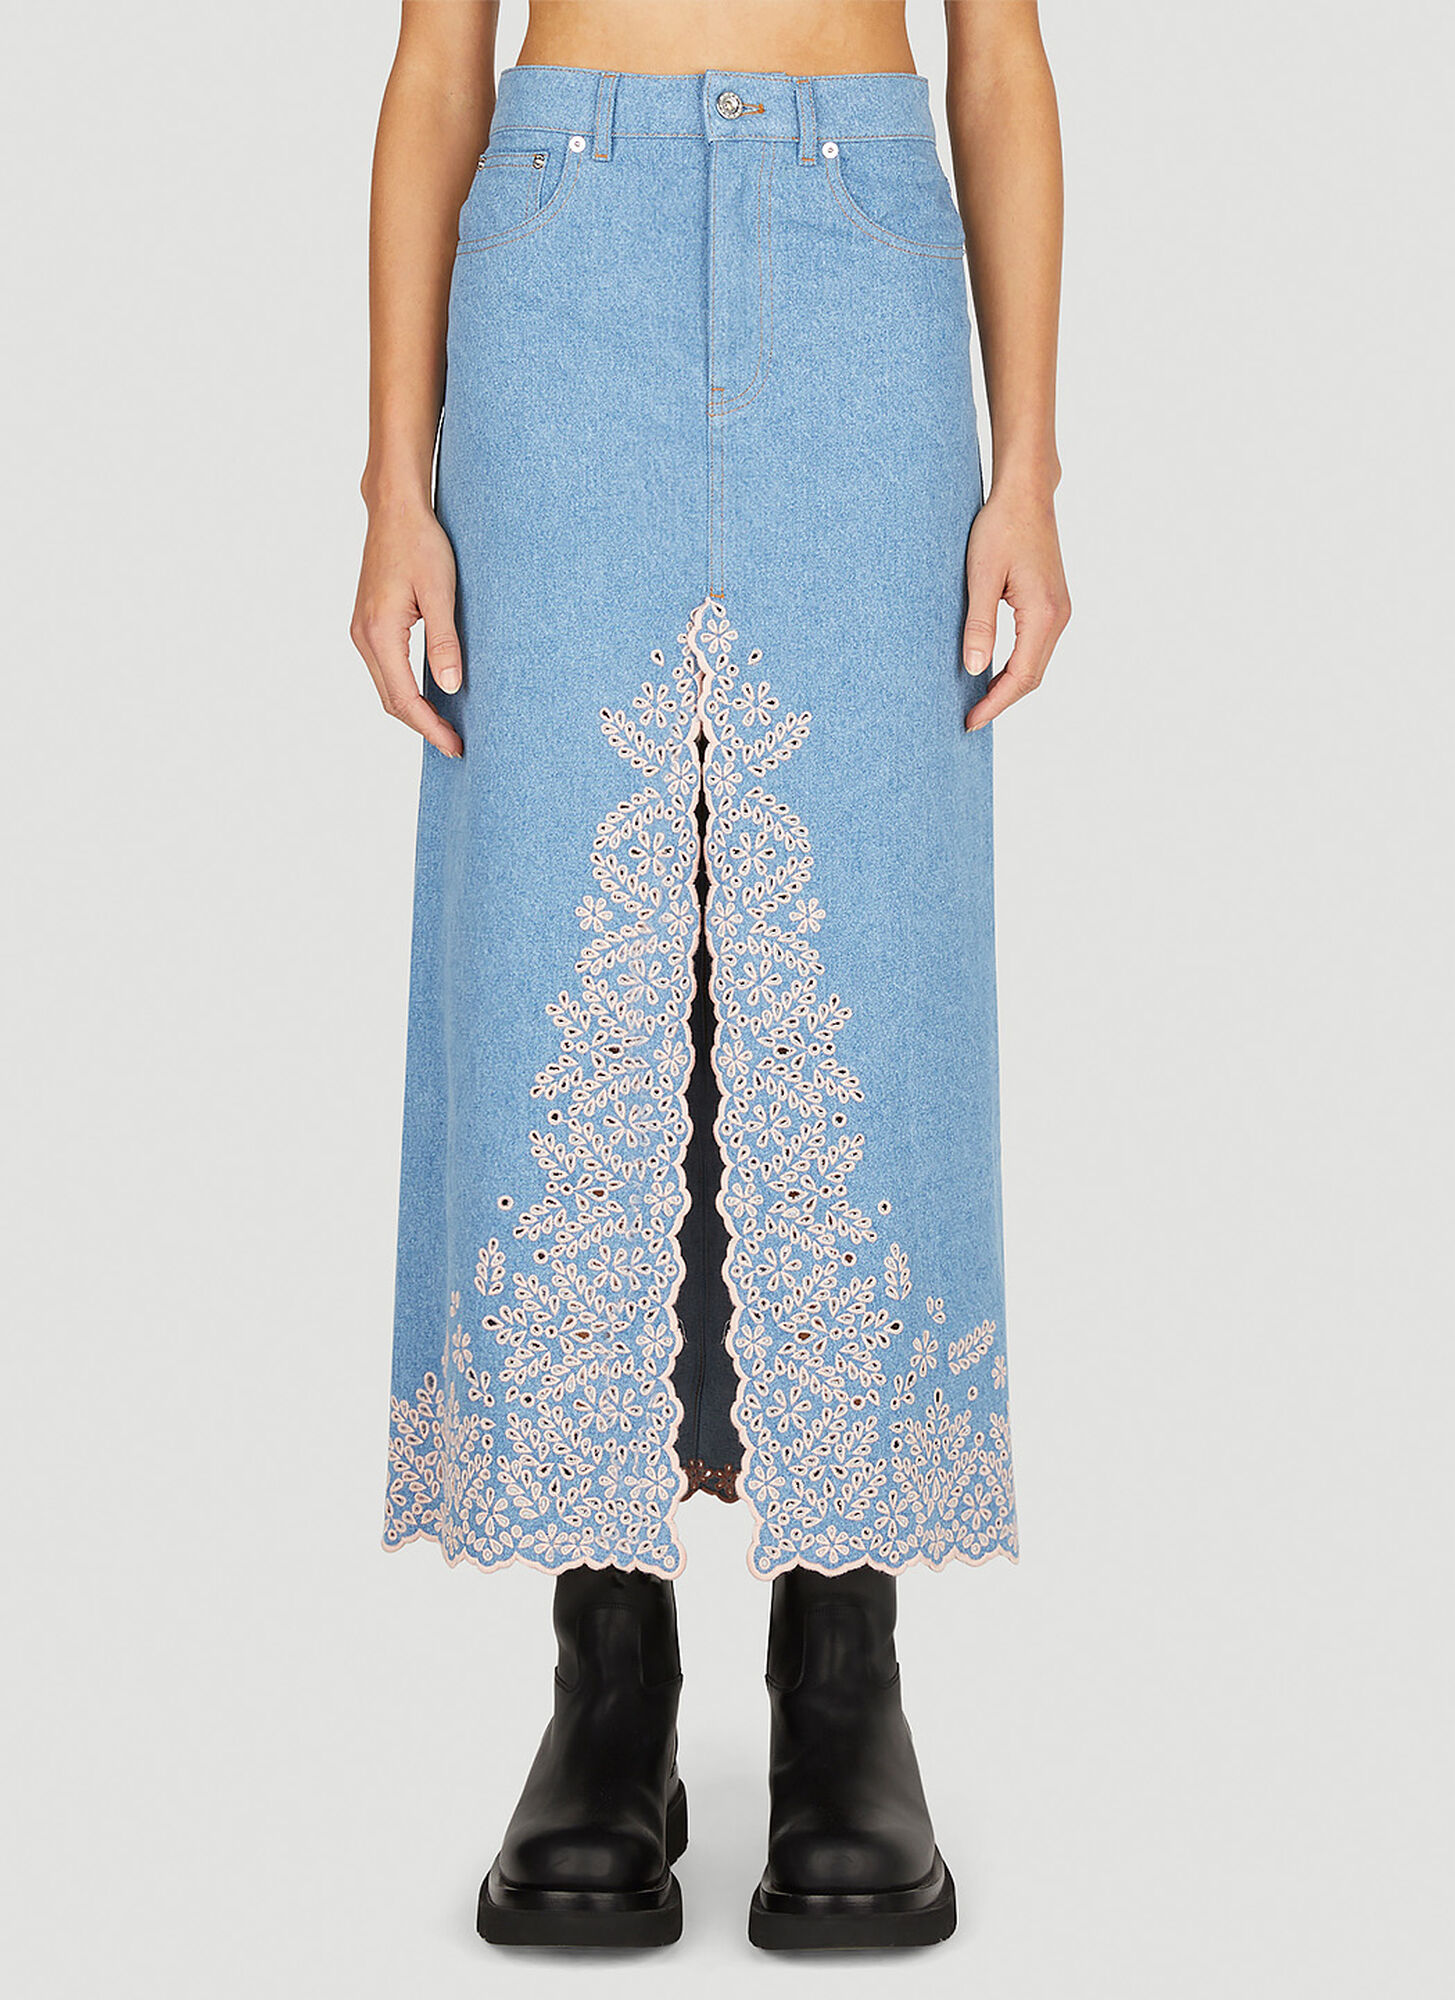 Paco Rabanne Embroidered Denim Skirt In Blue